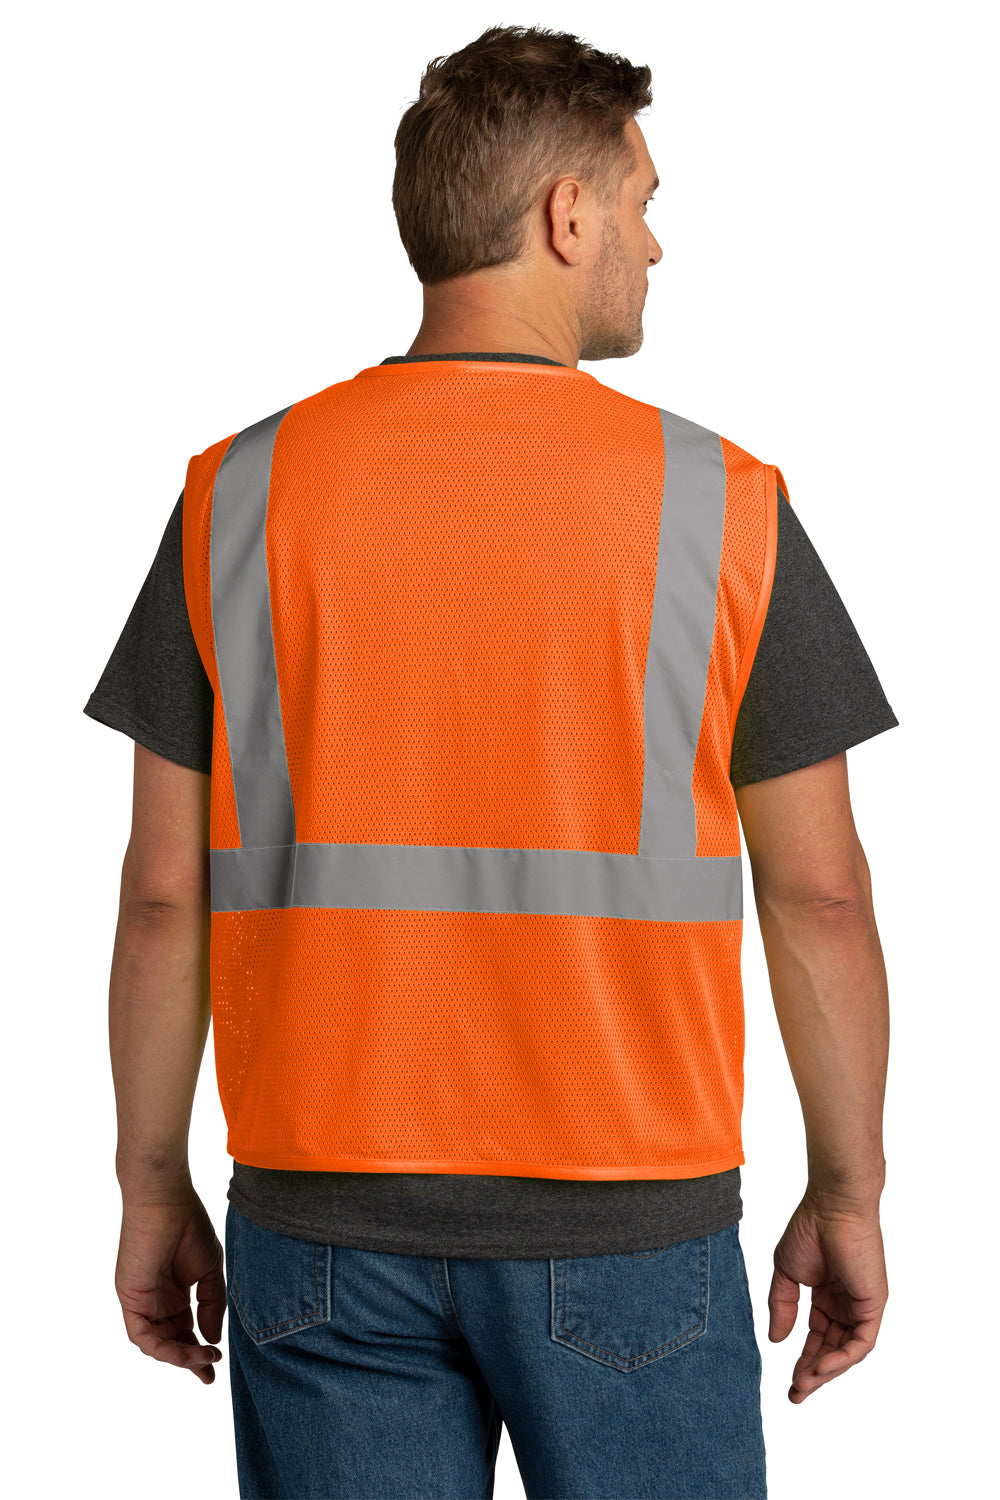 CornerStone CSV101 Mens ANSI 107 Class 2 Mesh Zipper Vest Safety Orange Back